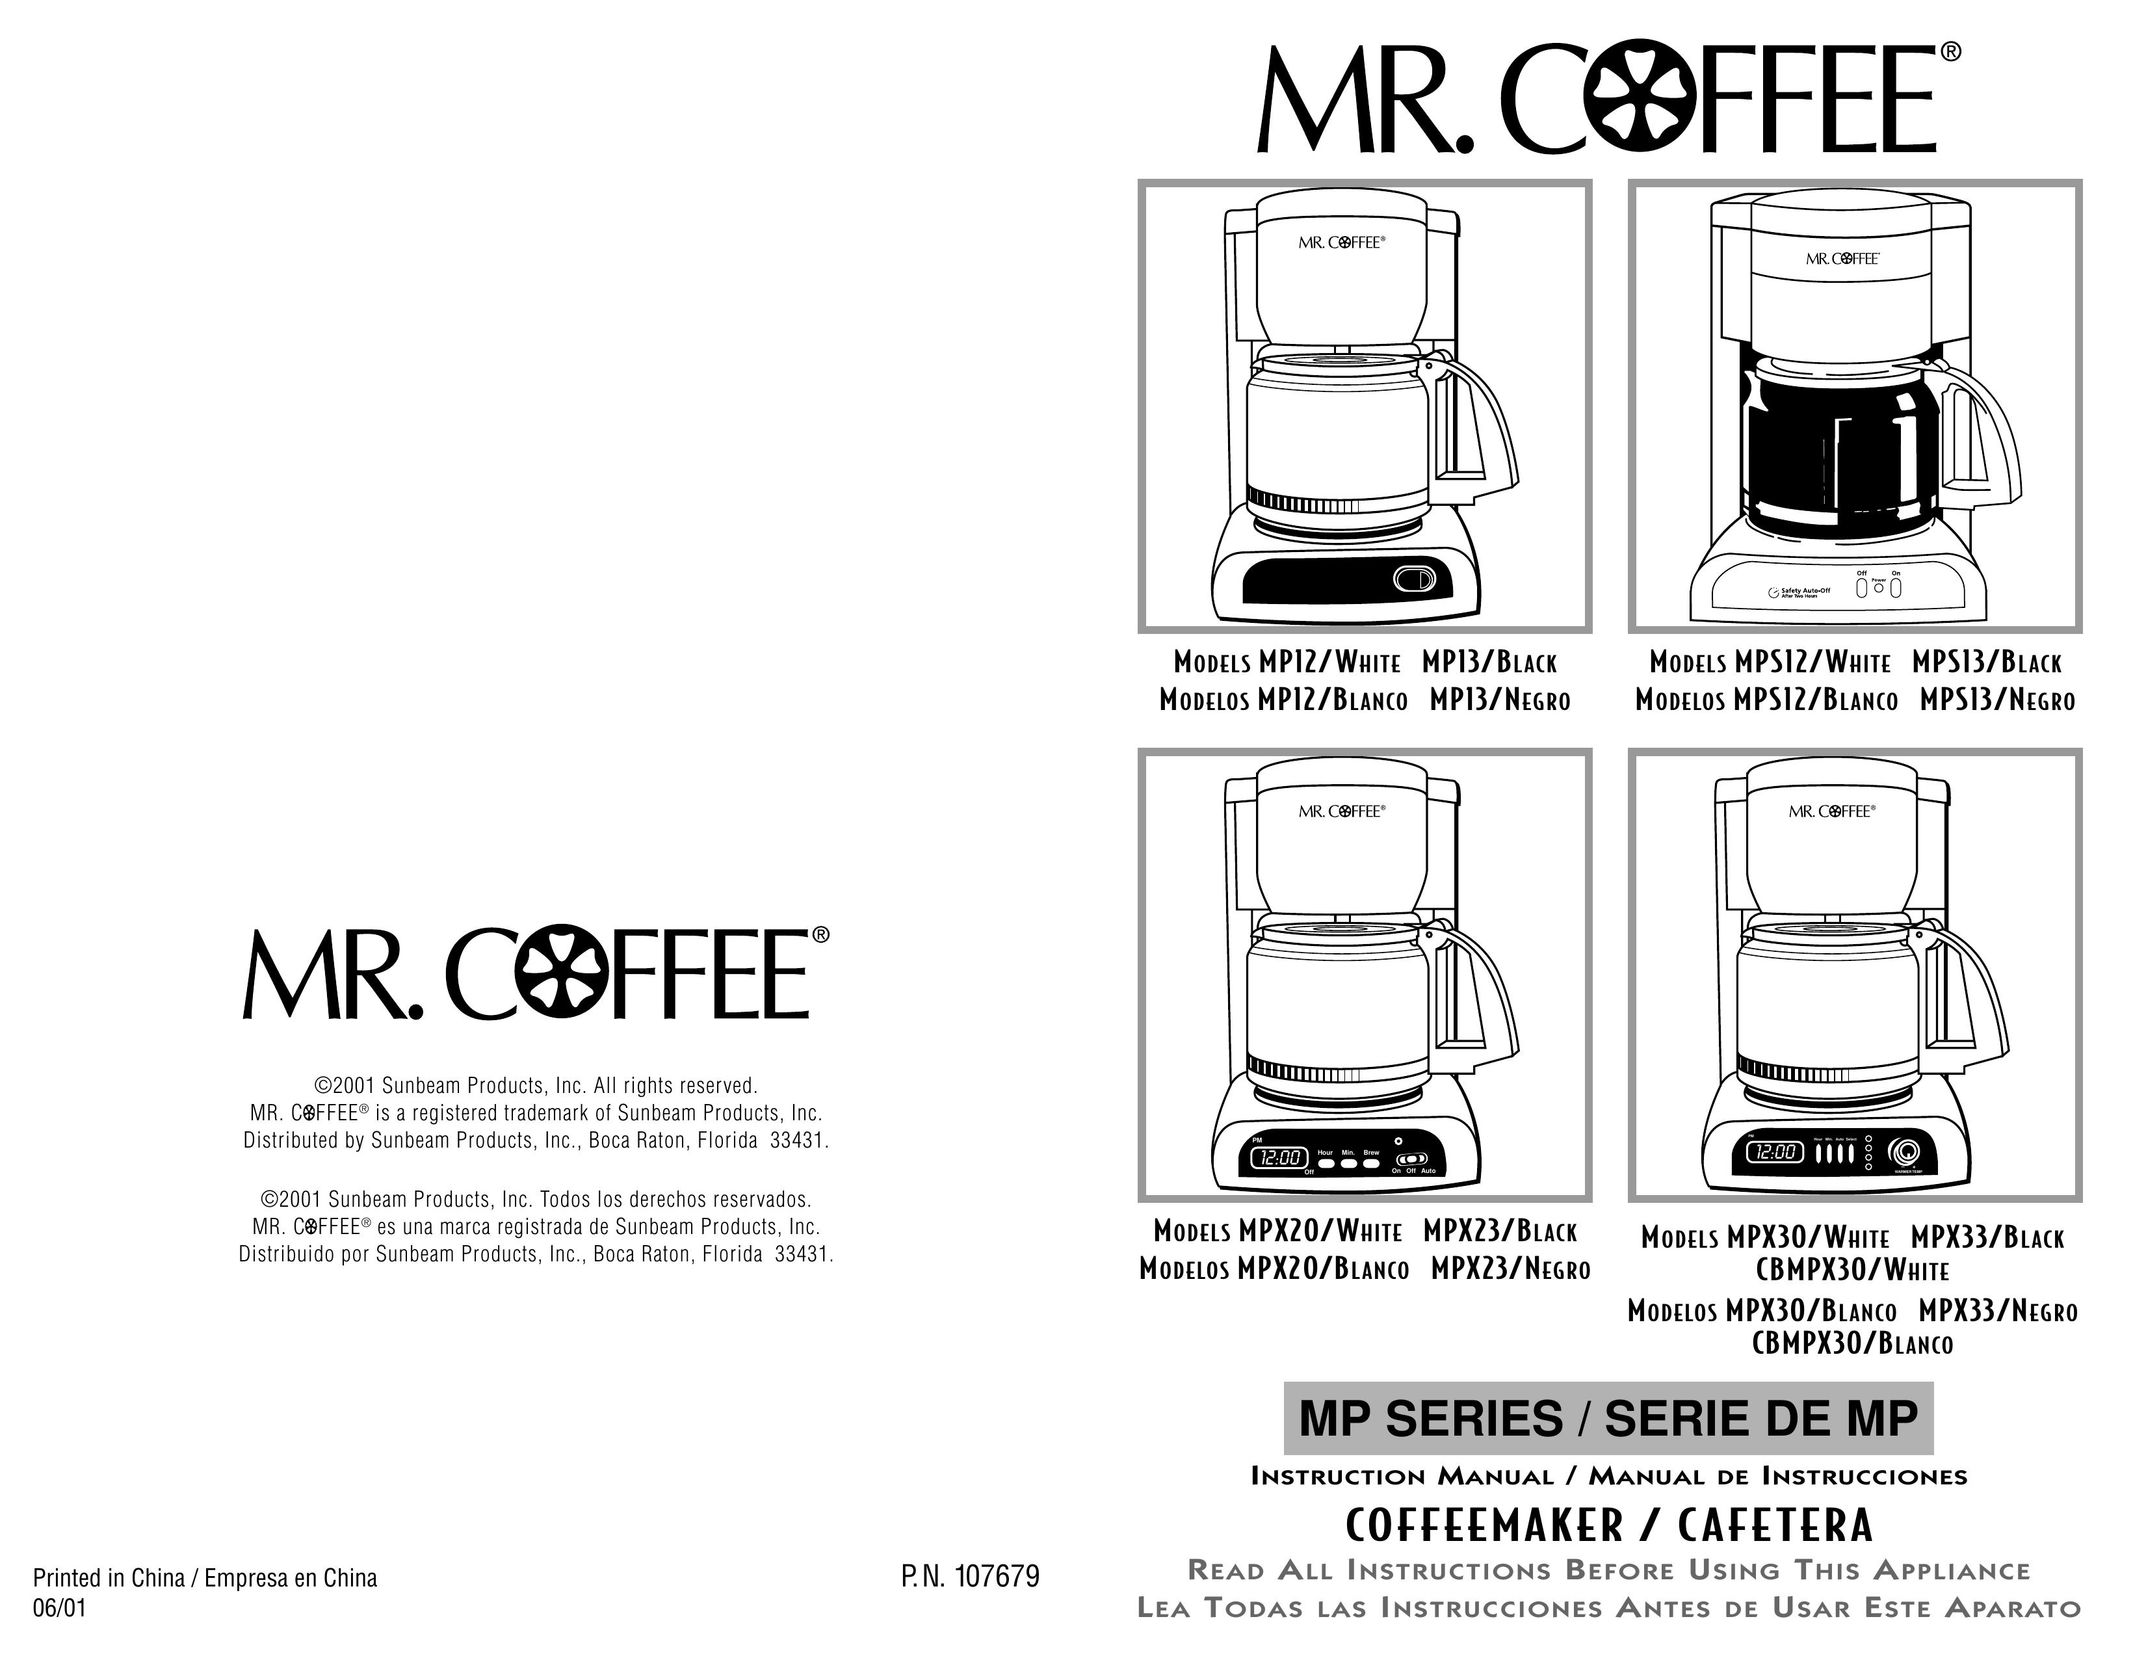 Mr. Coffee CBMPX30 Coffeemaker User Manual